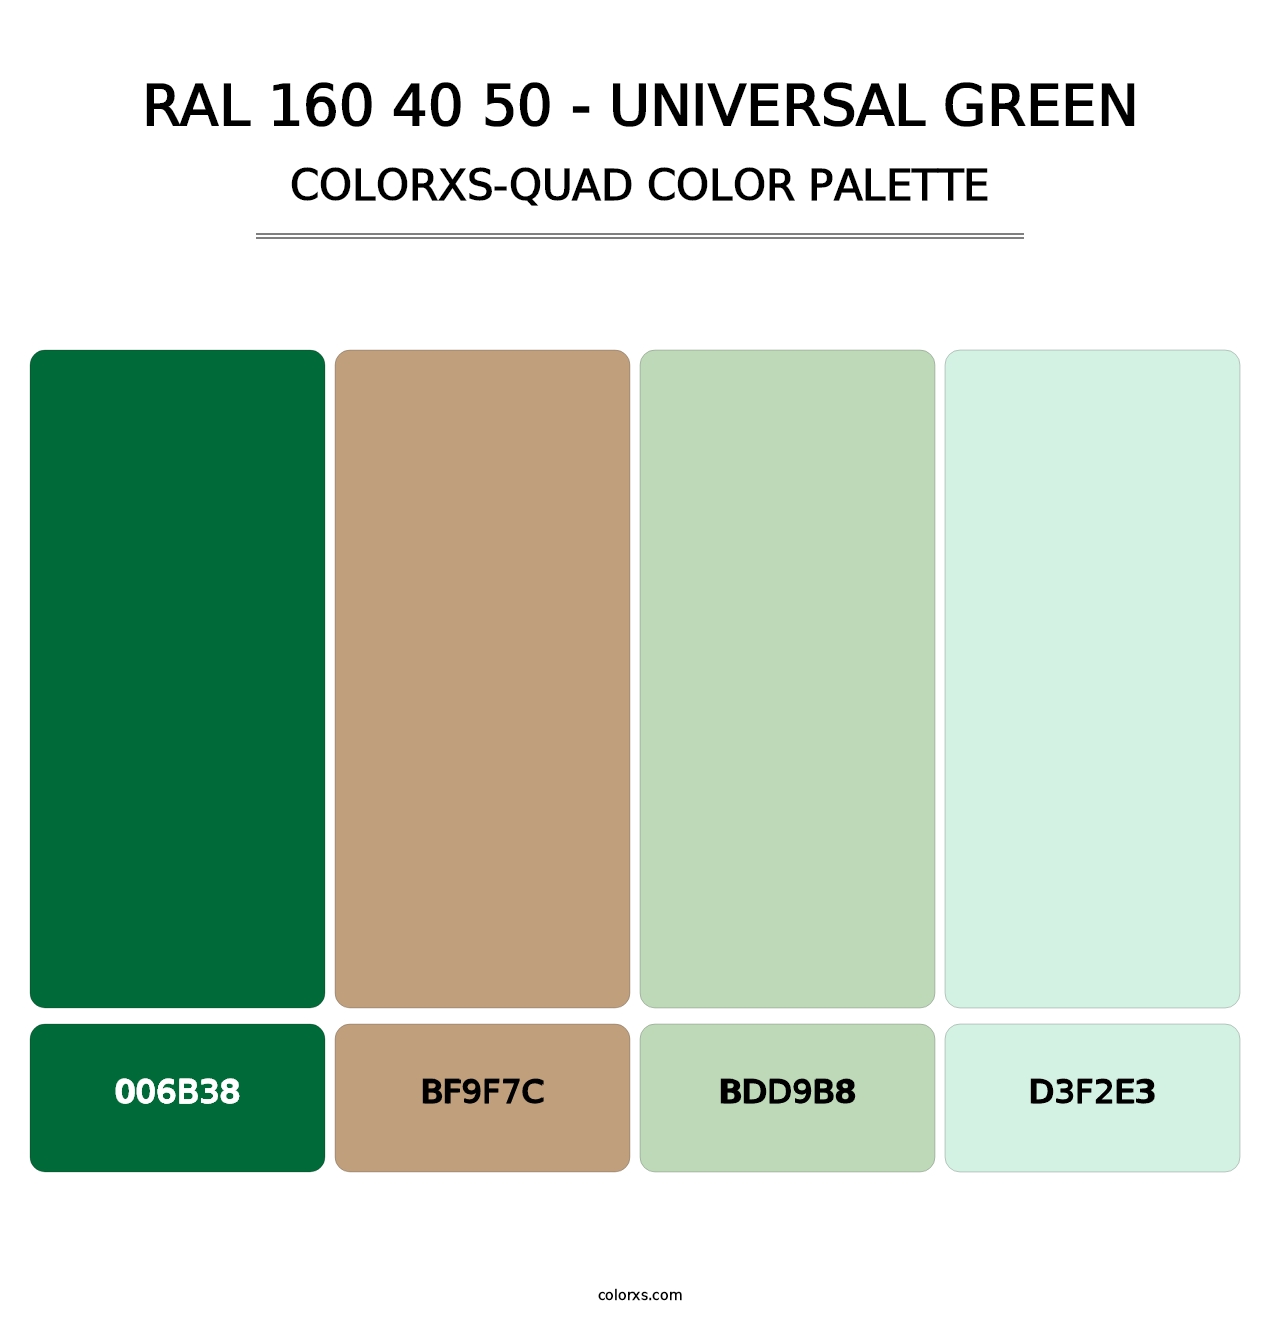 RAL 160 40 50 - Universal Green - Colorxs Quad Palette